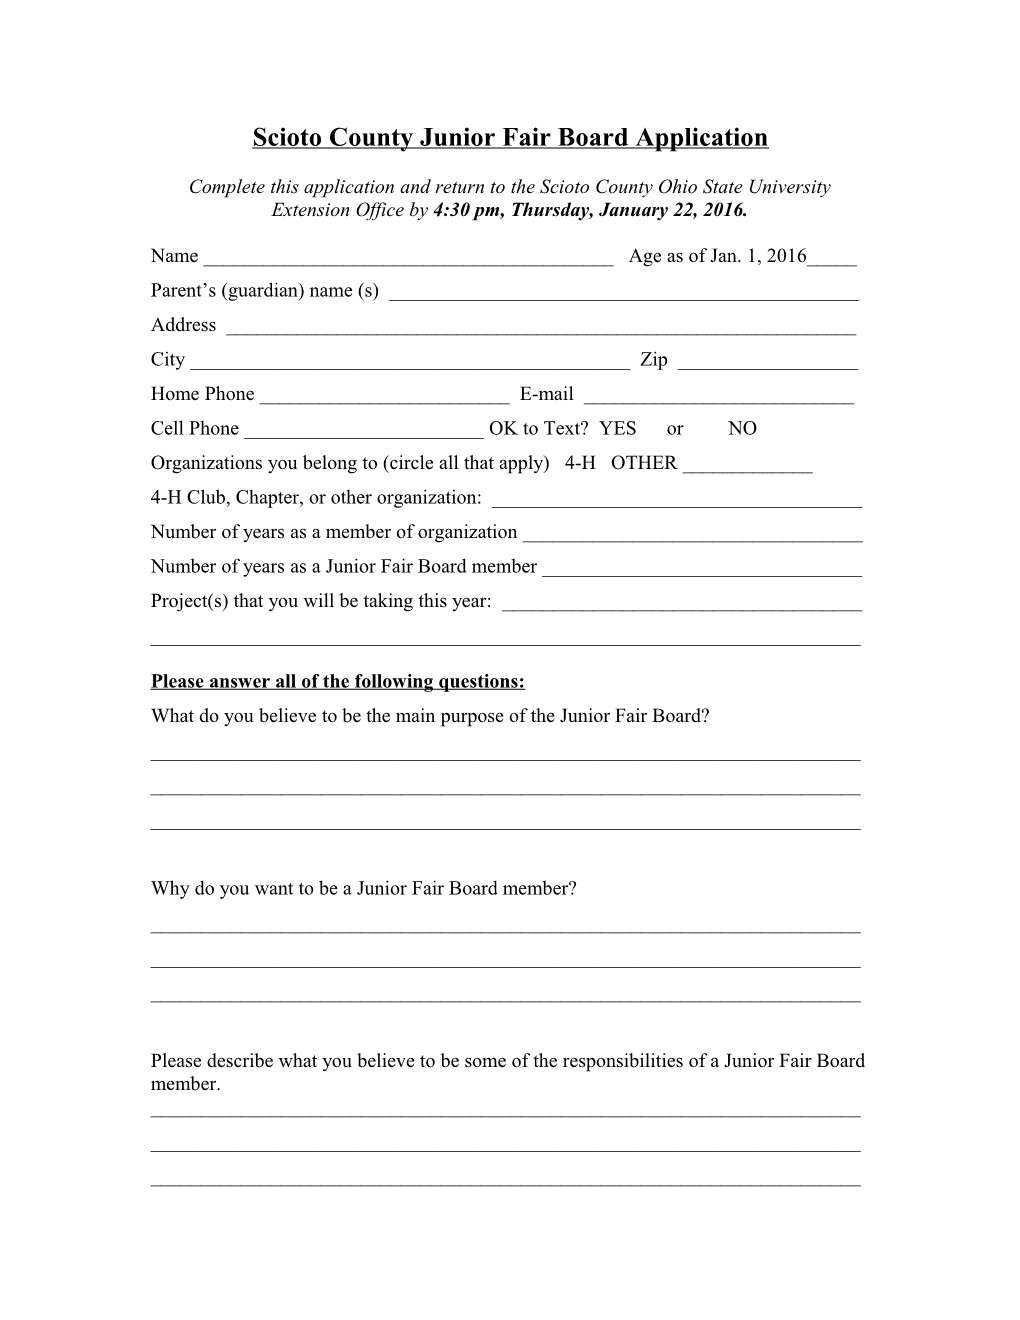 Jackson County Junior Fair Board Application